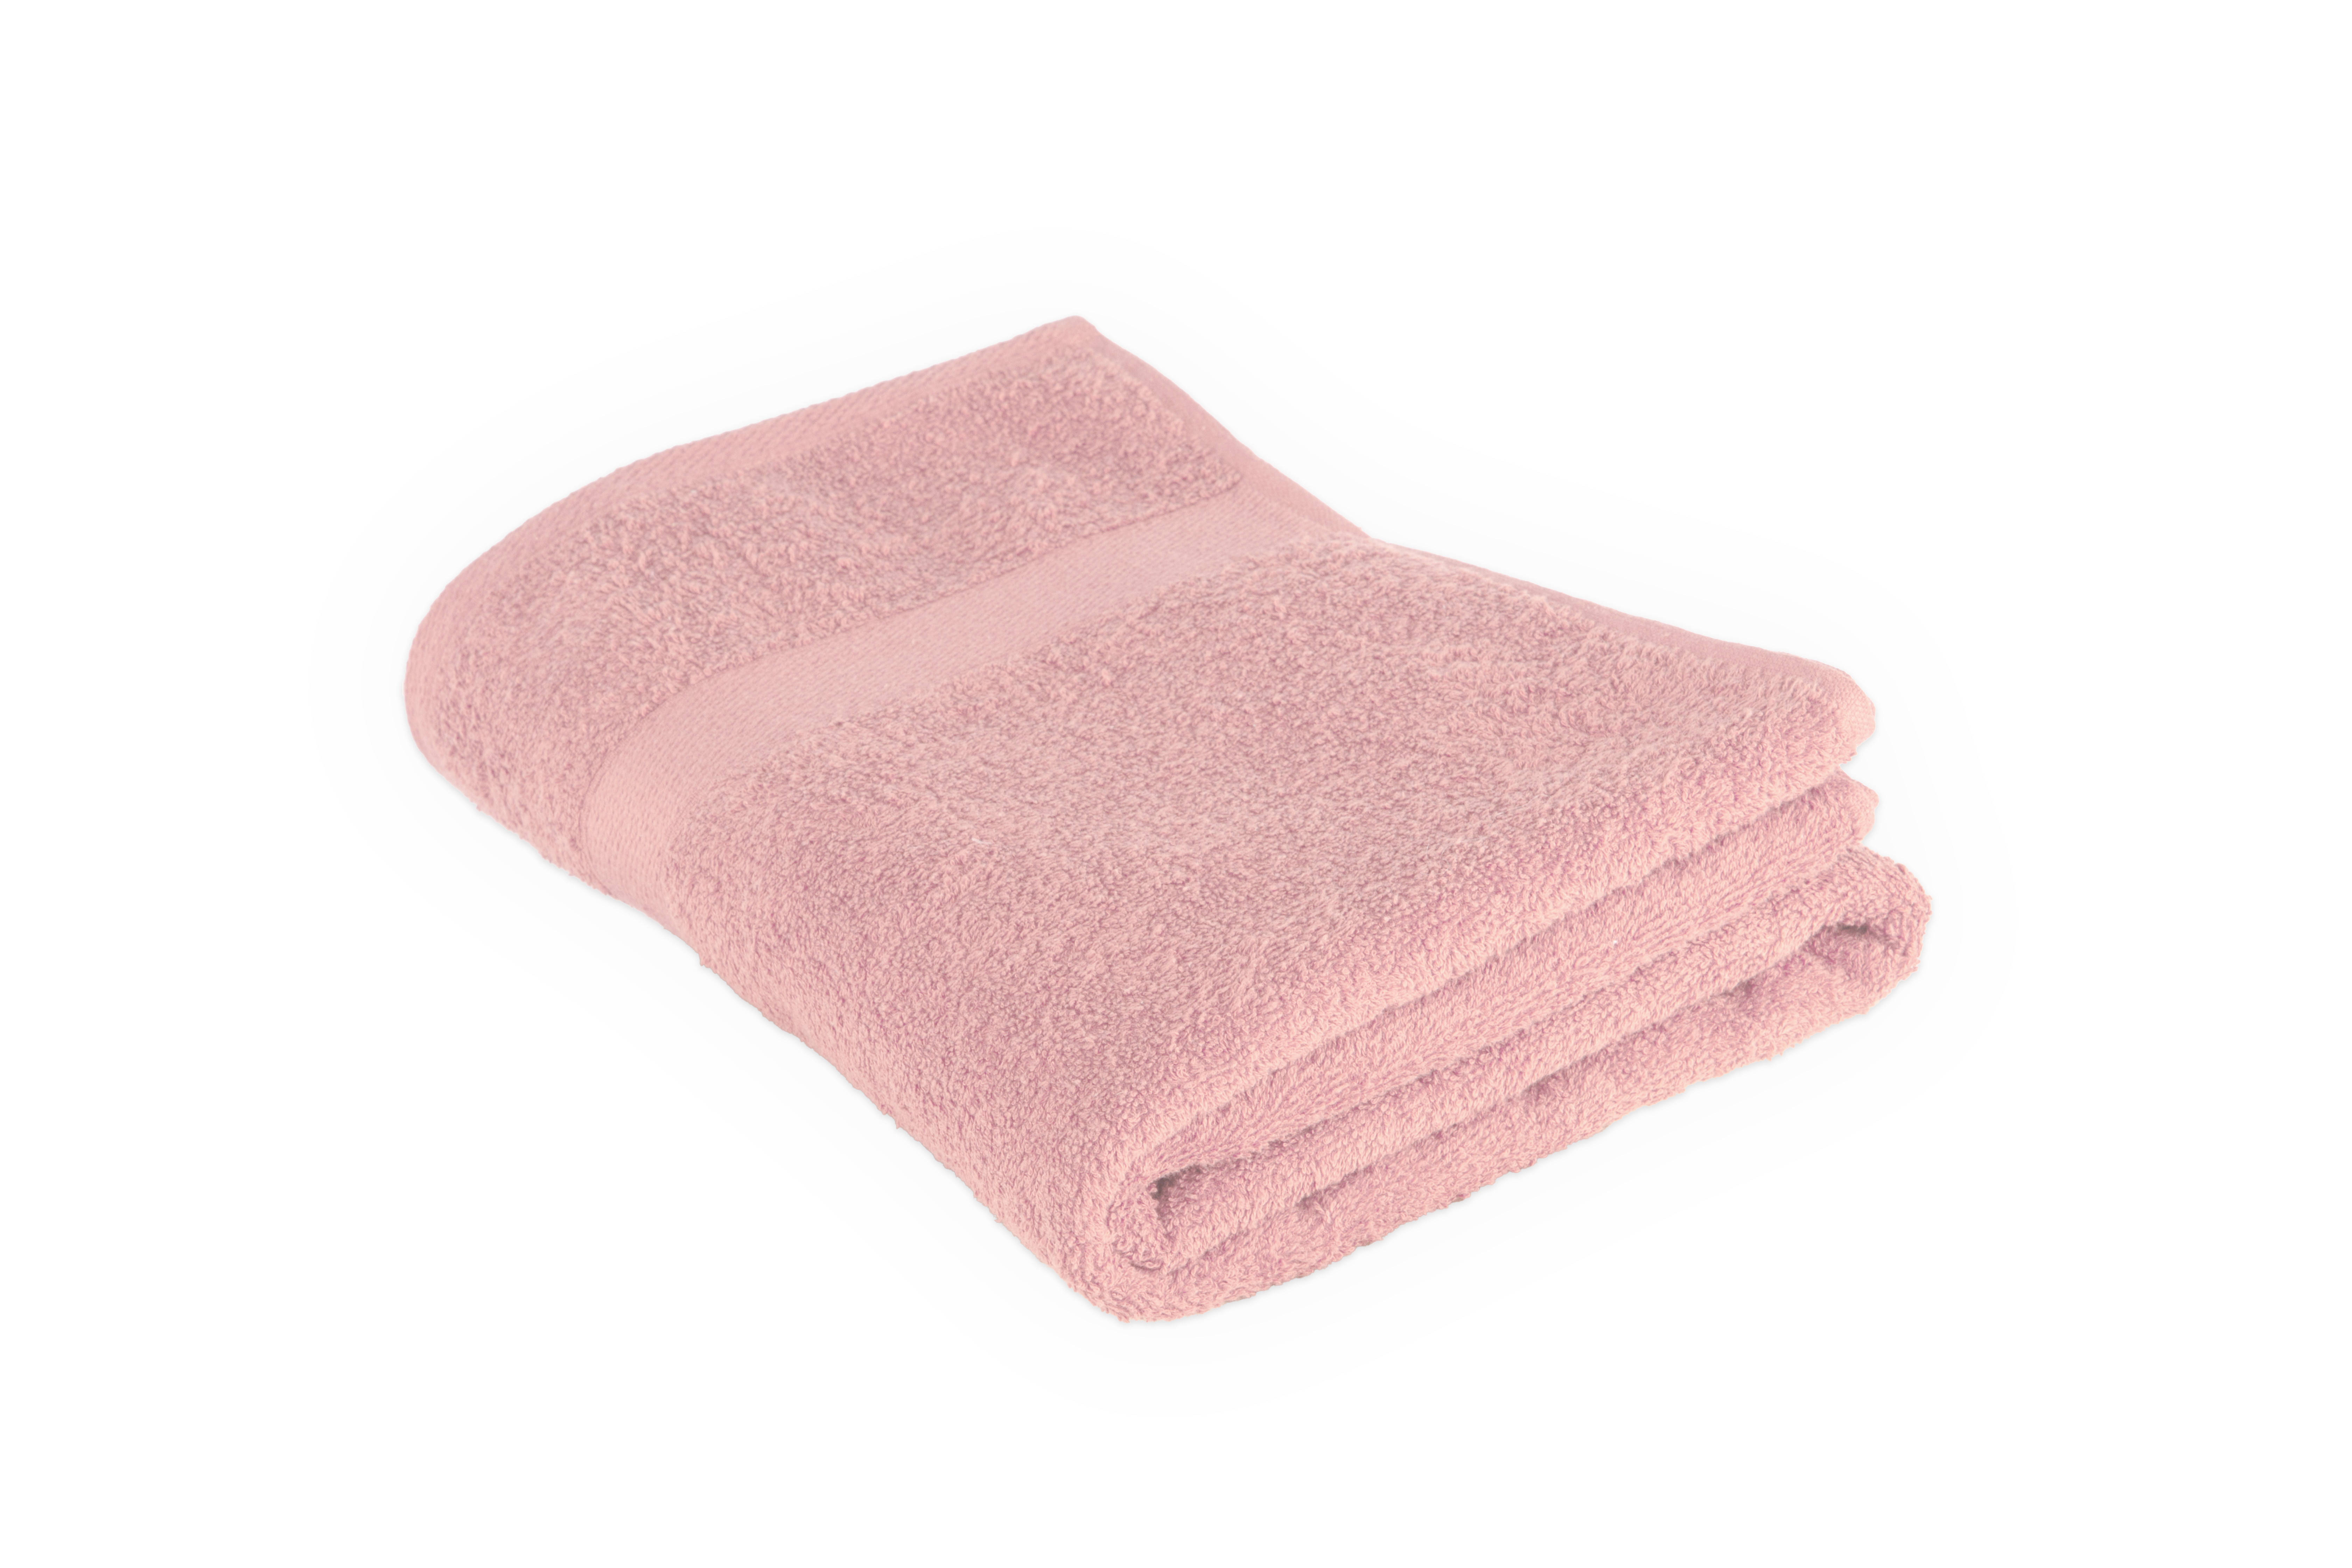 Shower towel 100x150cm, pink